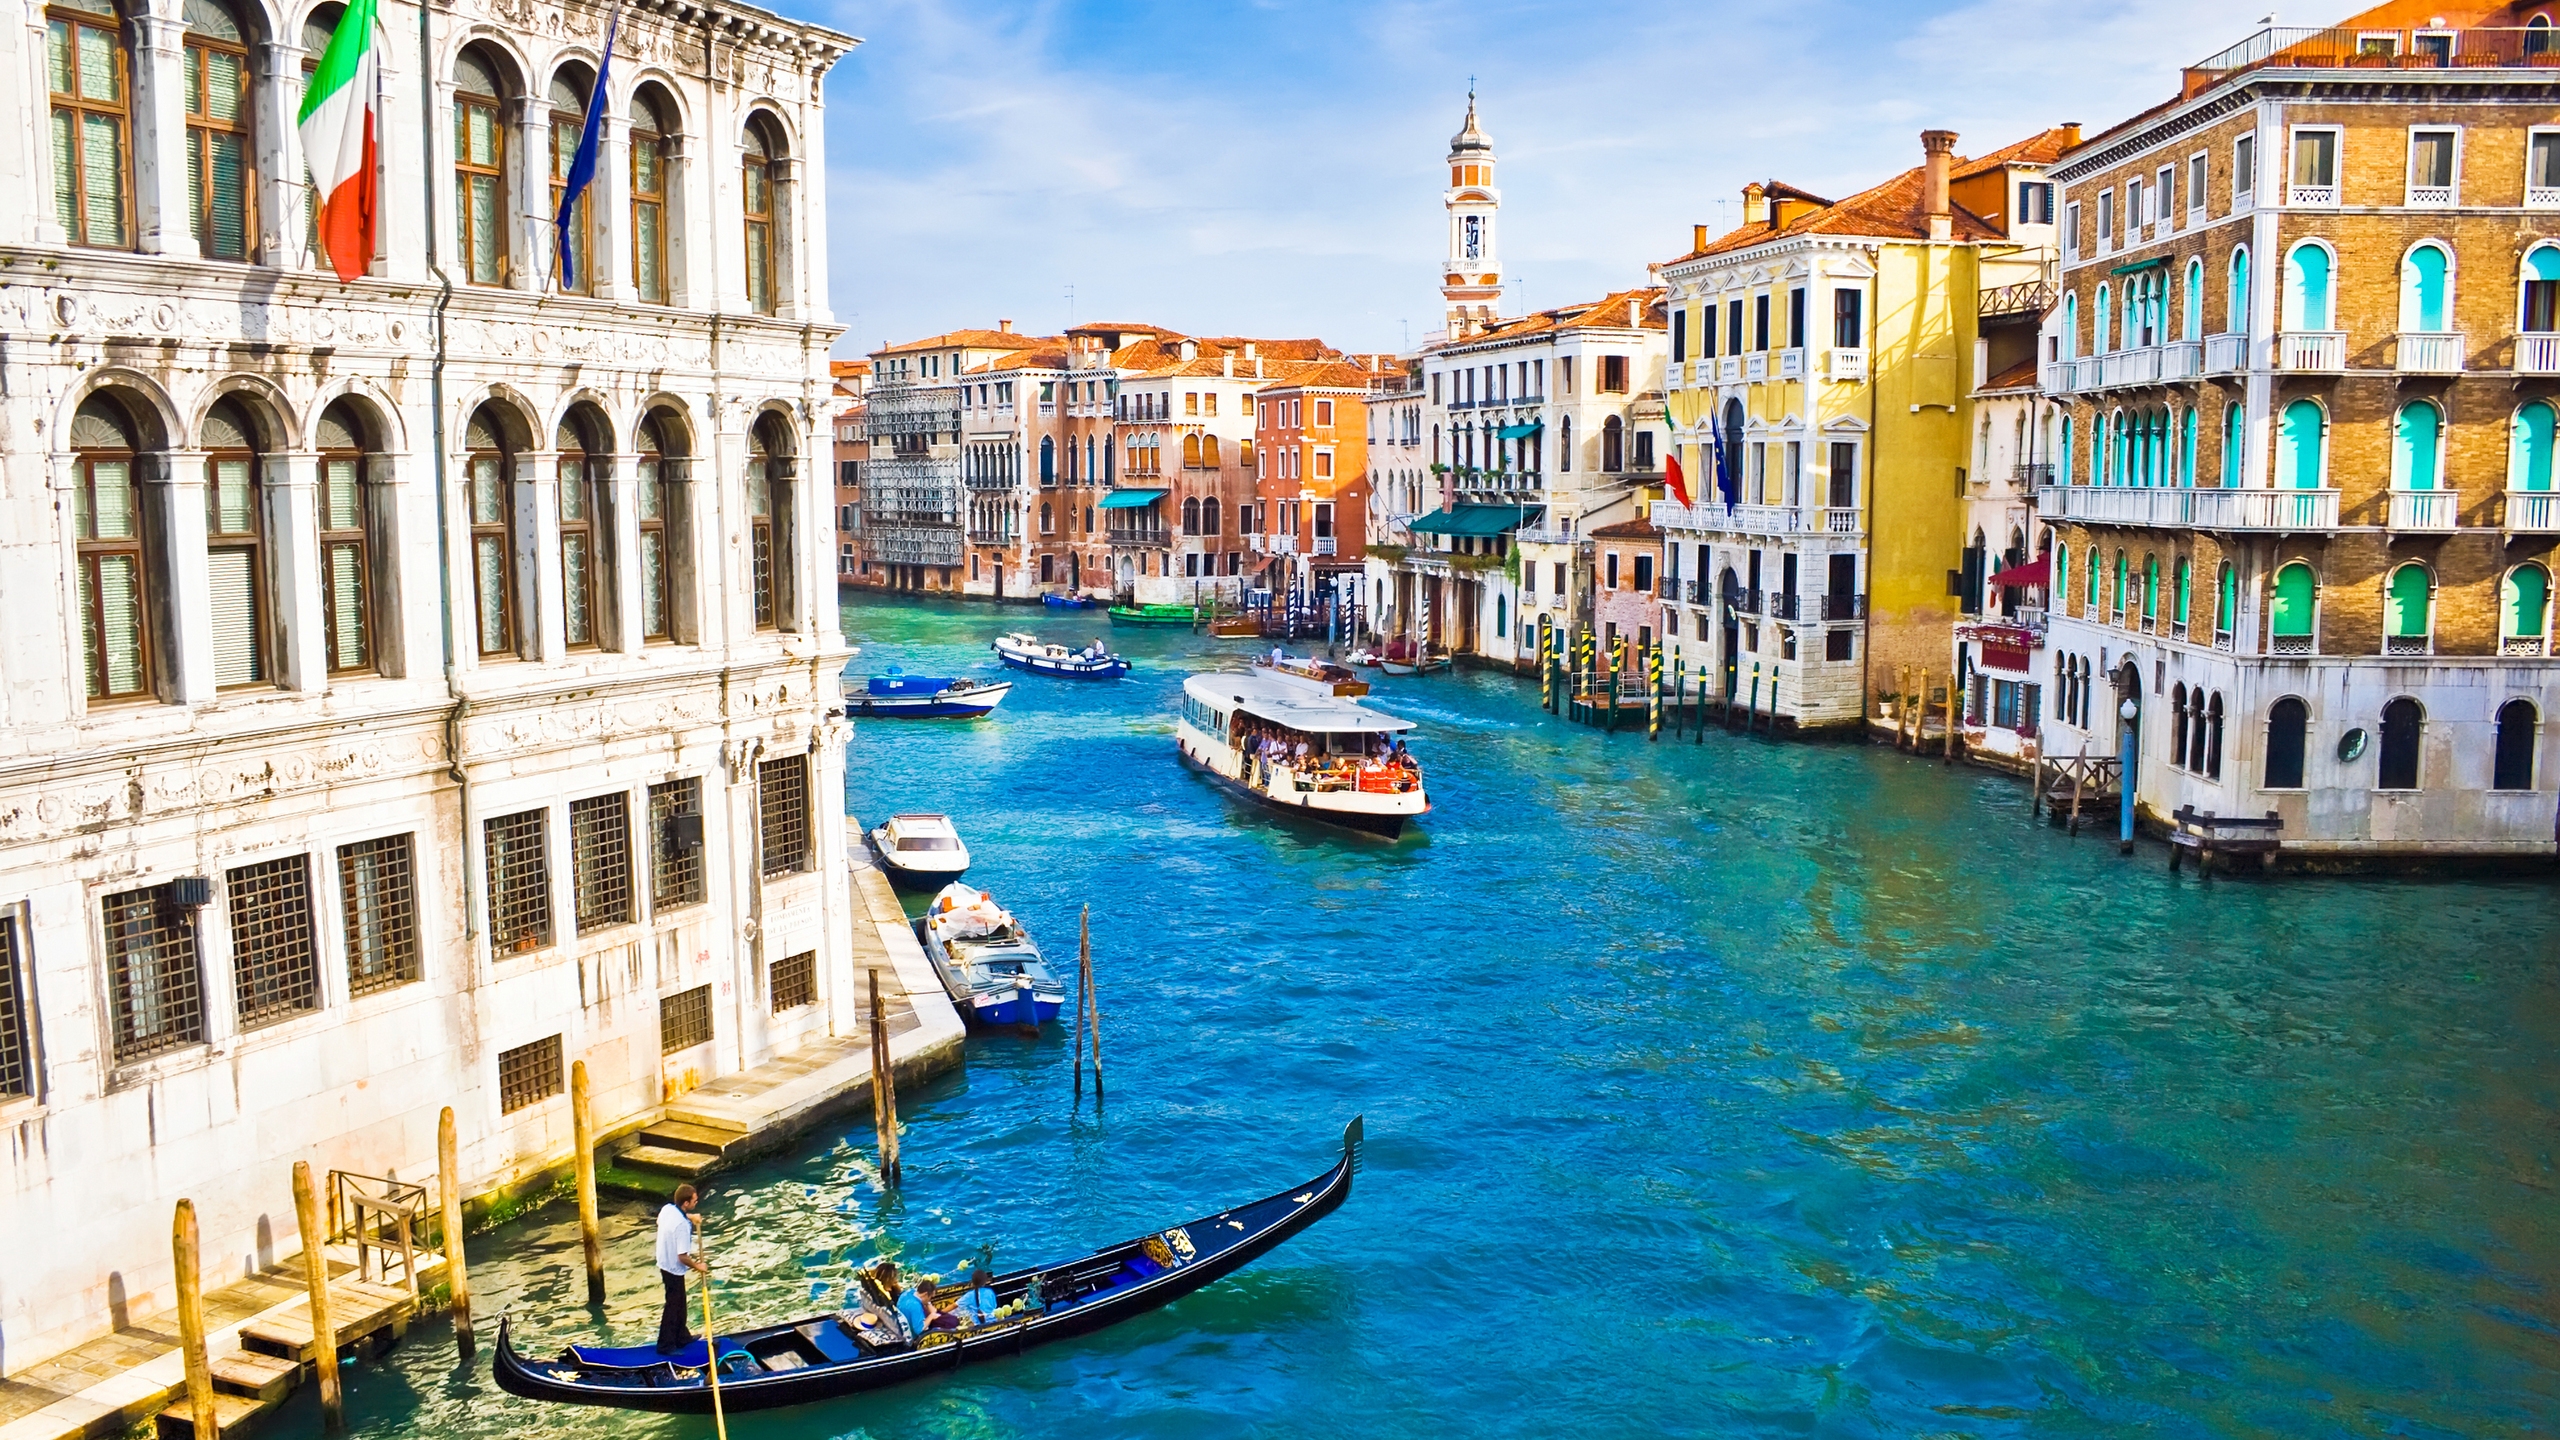 Beautiful Venice for 2560x1440 HDTV resolution